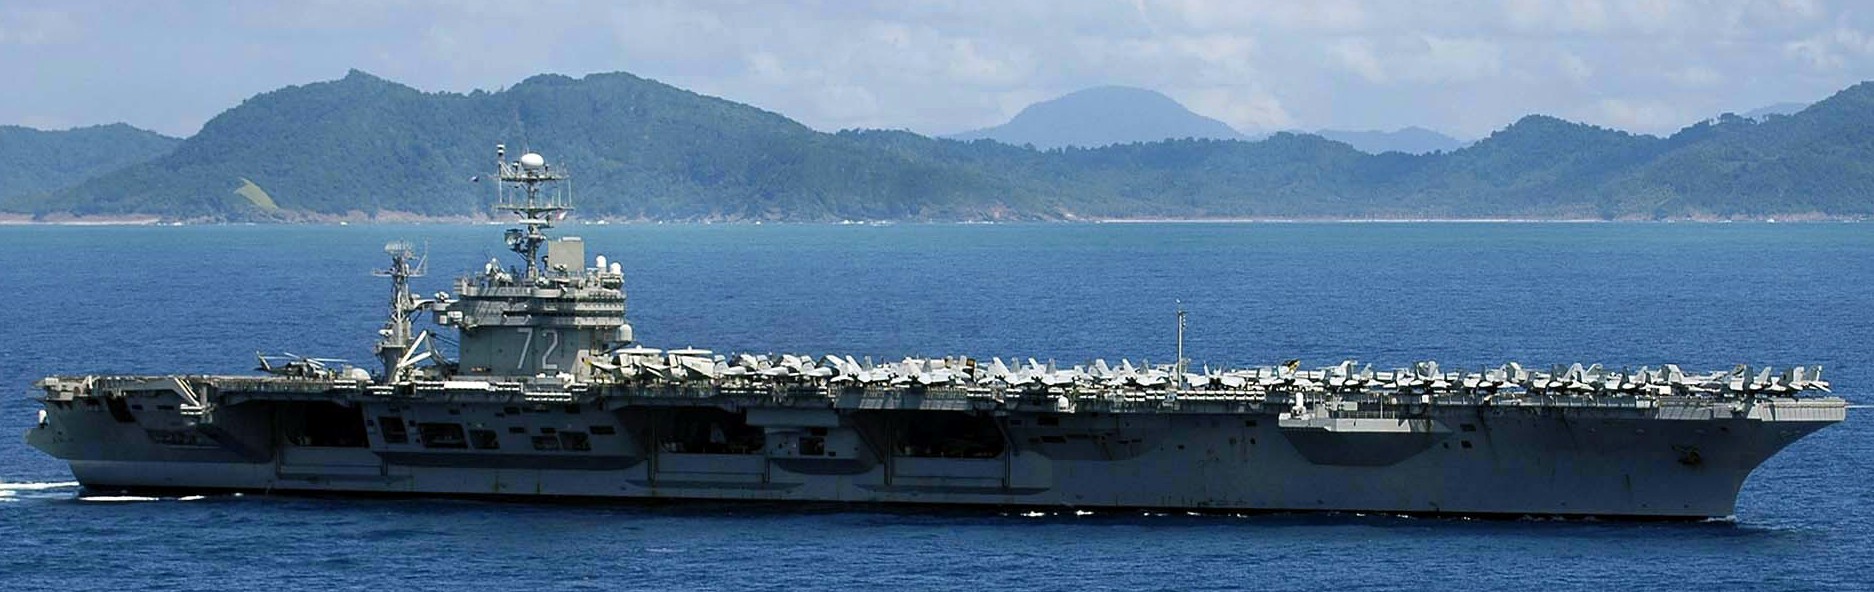 cvn-72 uss abraham lincoln nimitz class aircraft carrier air wing cvw-2 us navy off indonesia 87